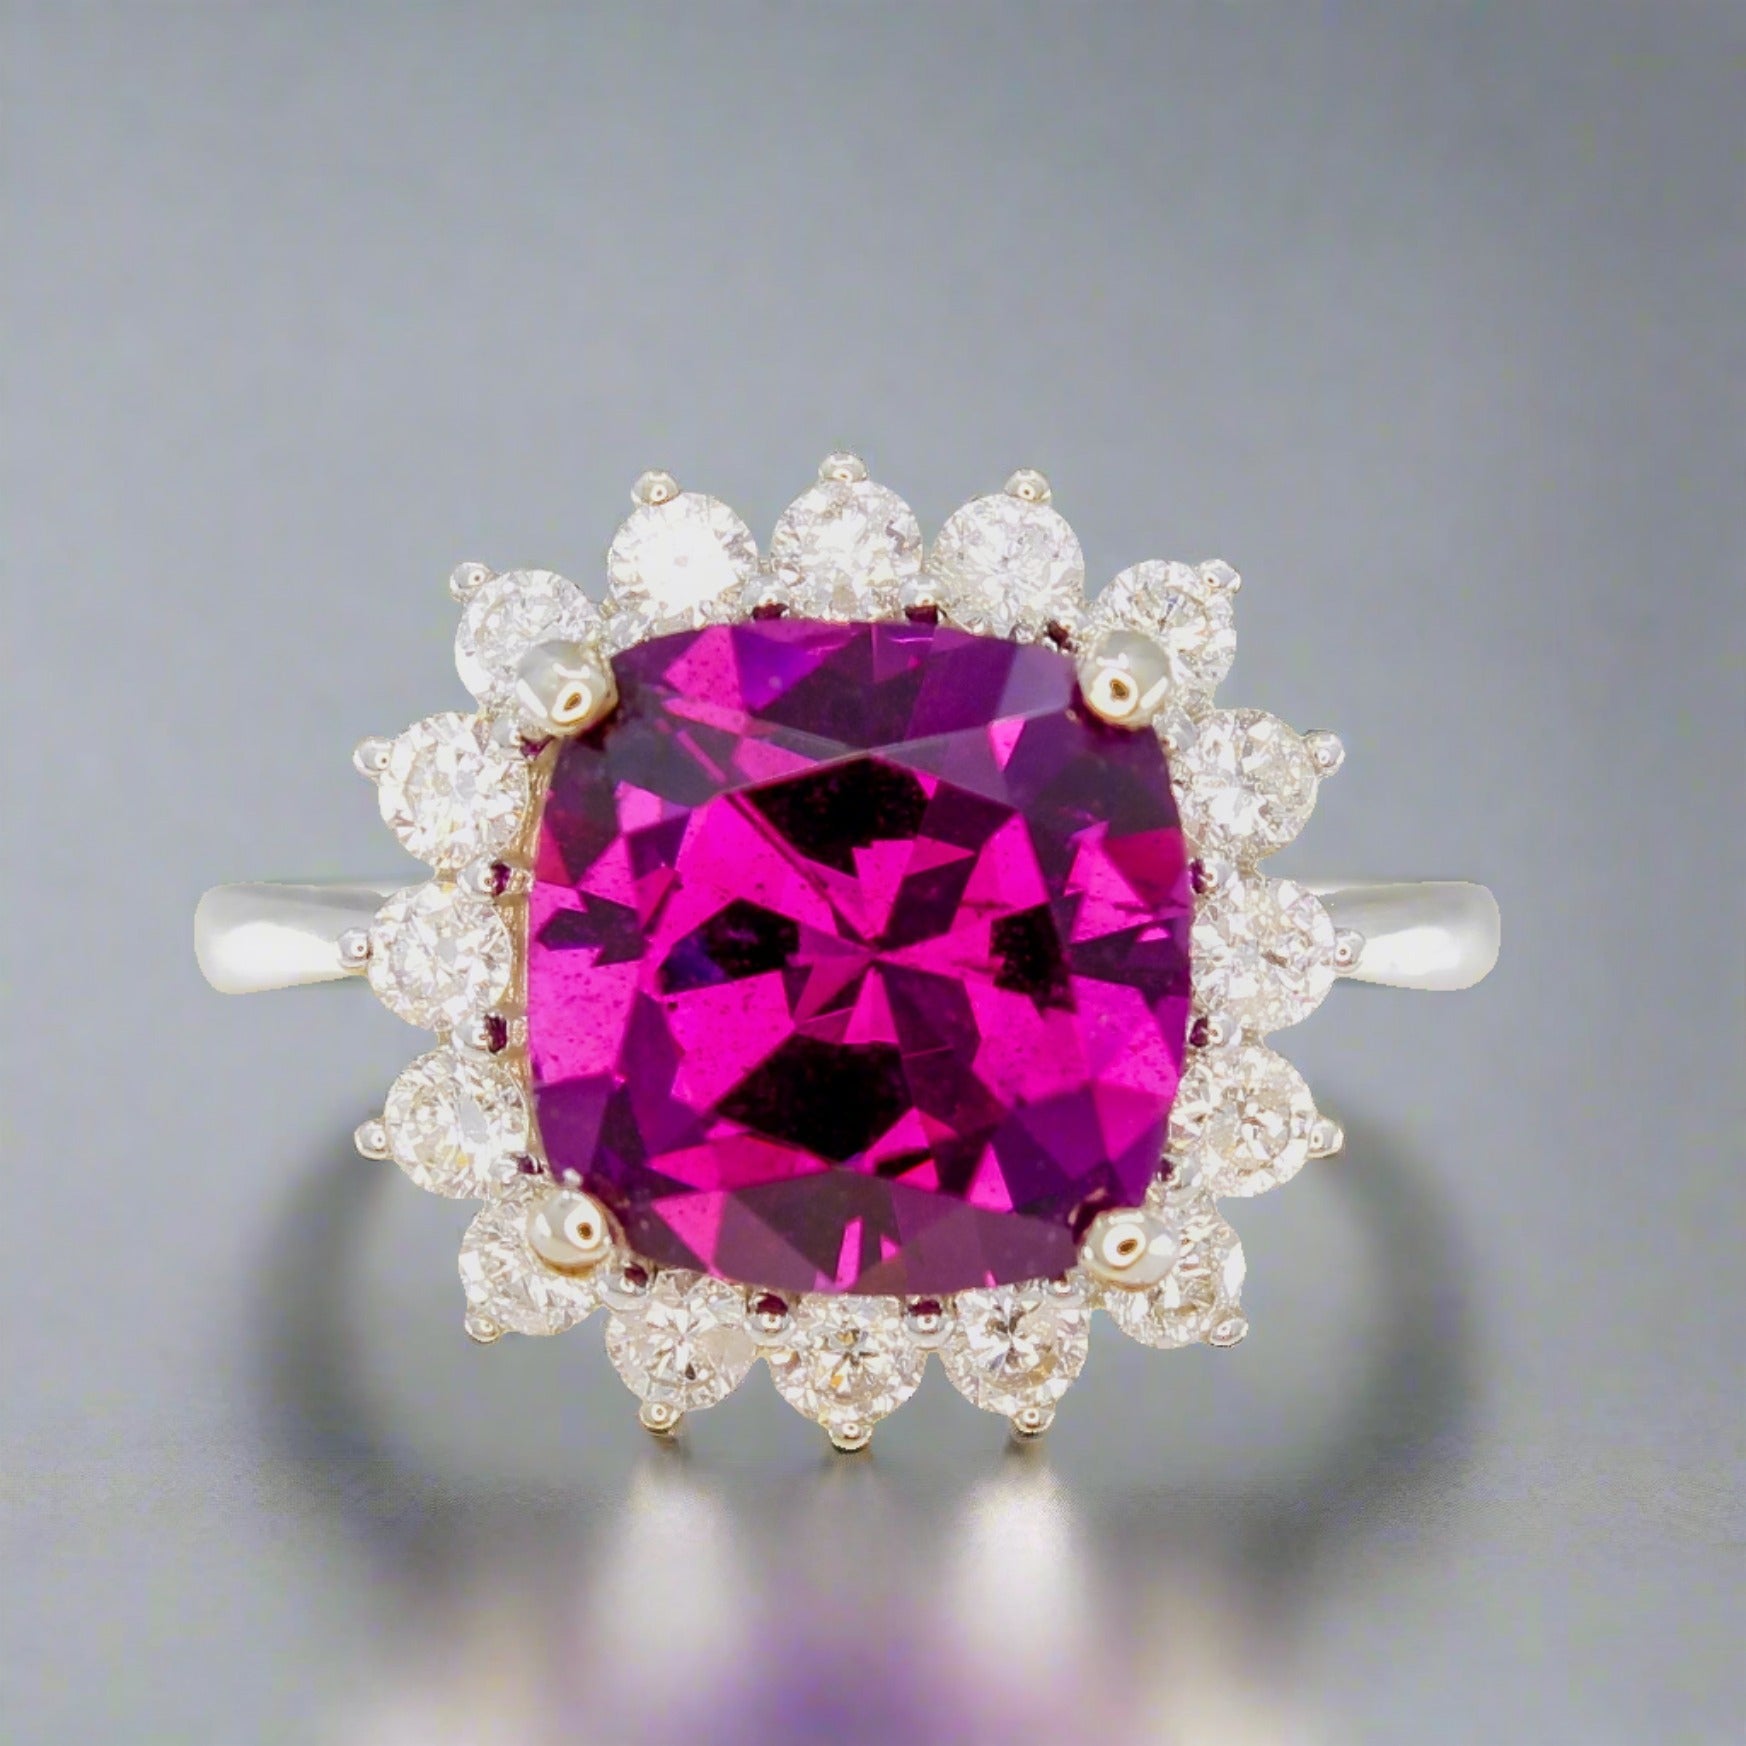 Royal Purple Garnet Ring in a Diamond Halo